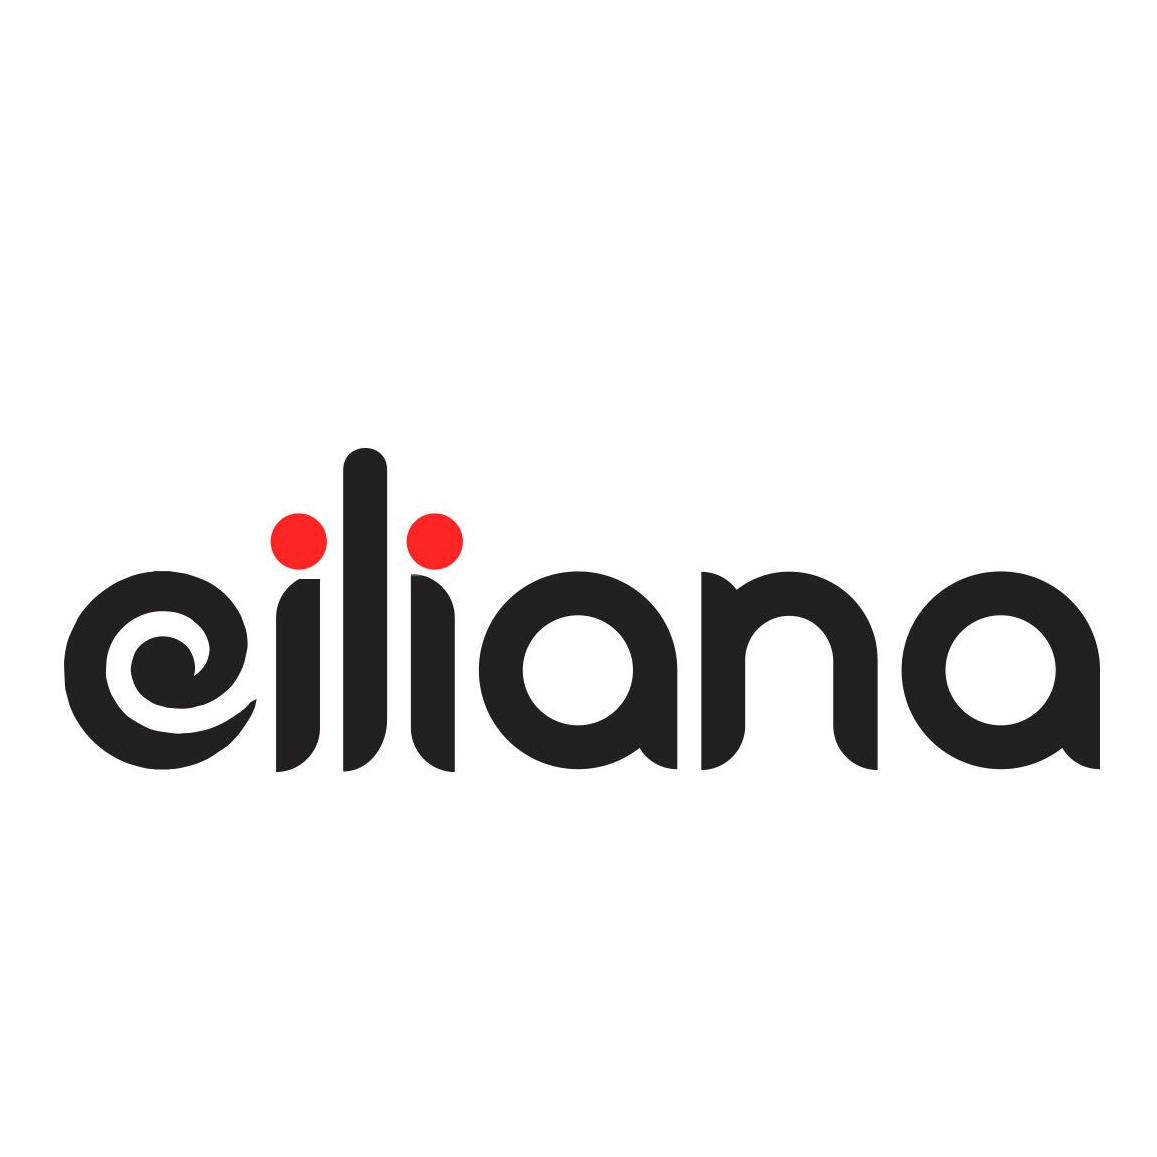 eiliana logo